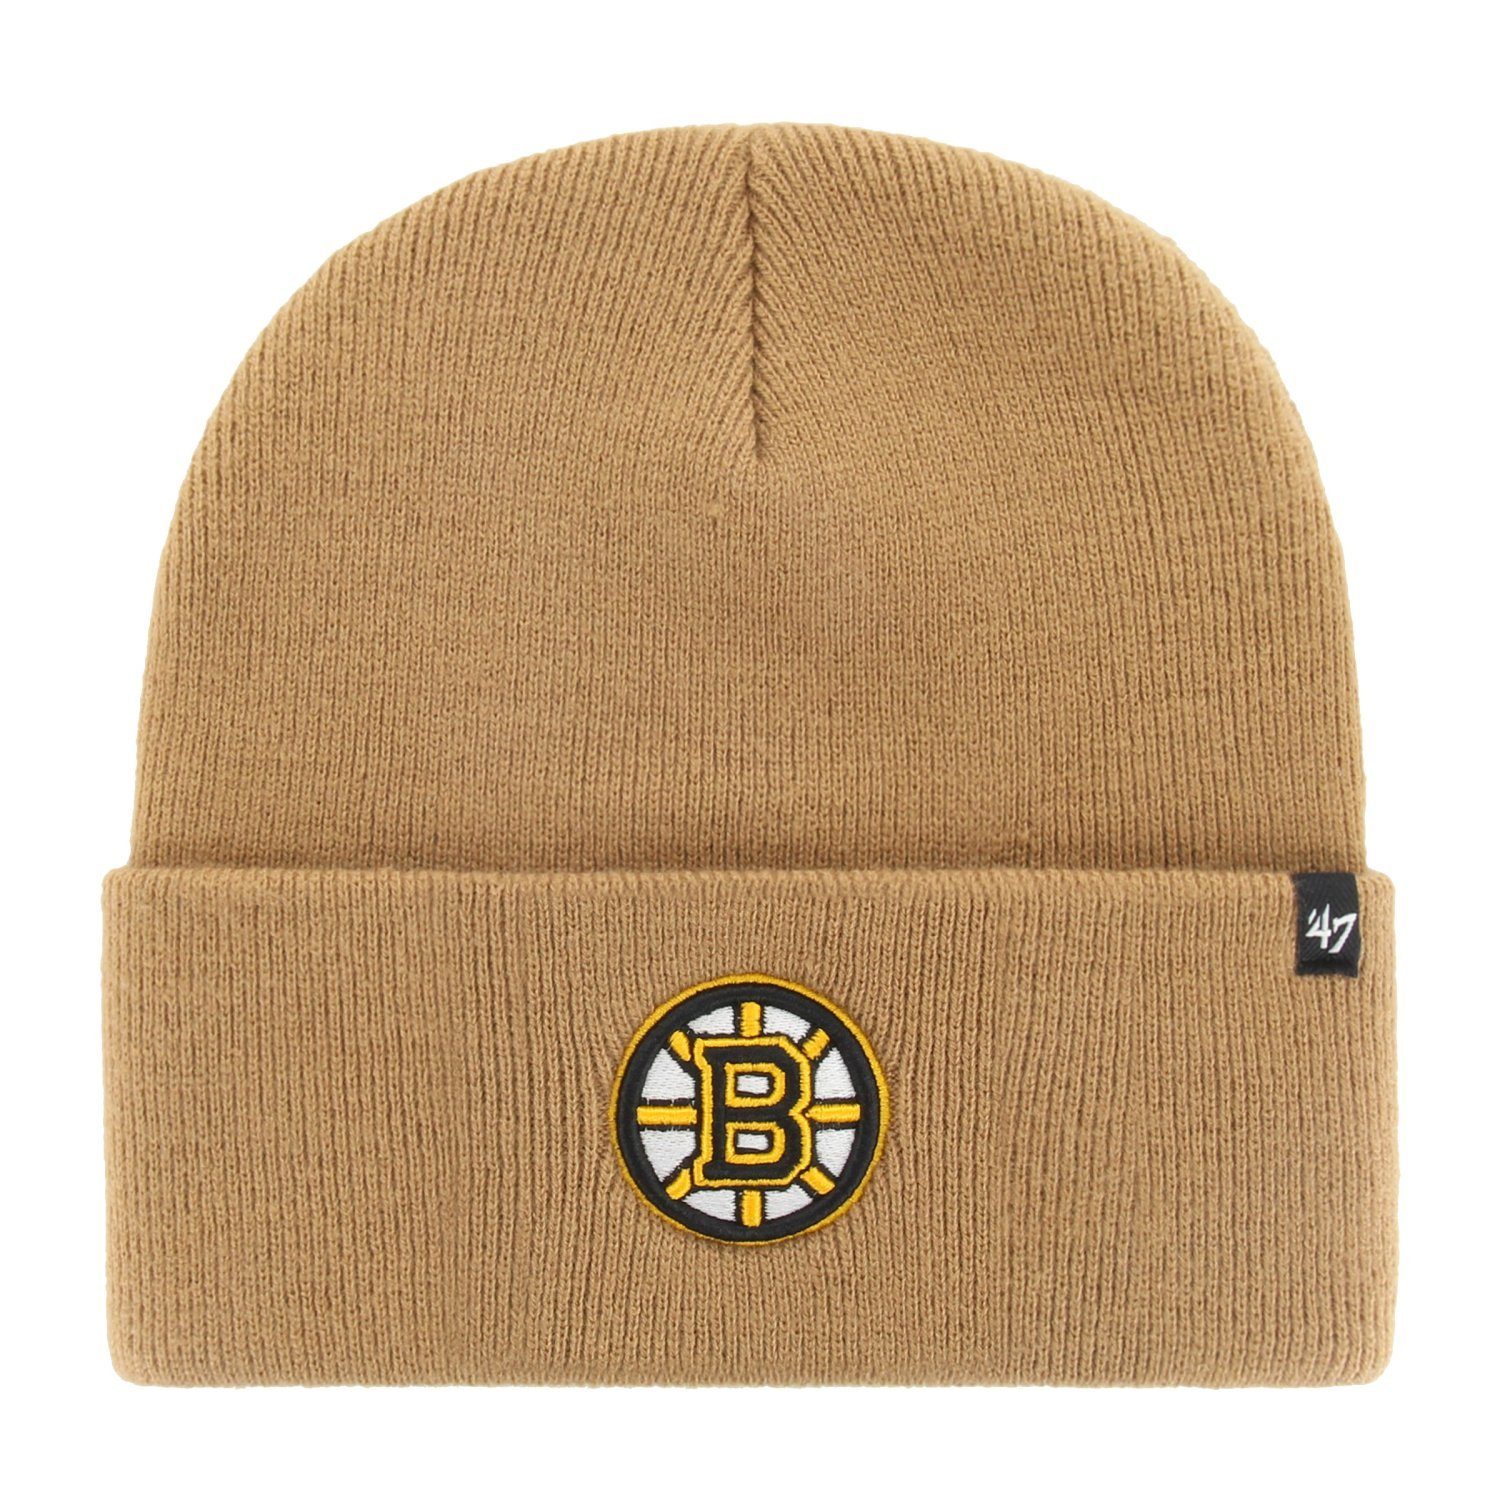 '47 Brand Fleecemütze Beanie HAYMAKER Boston Bruins